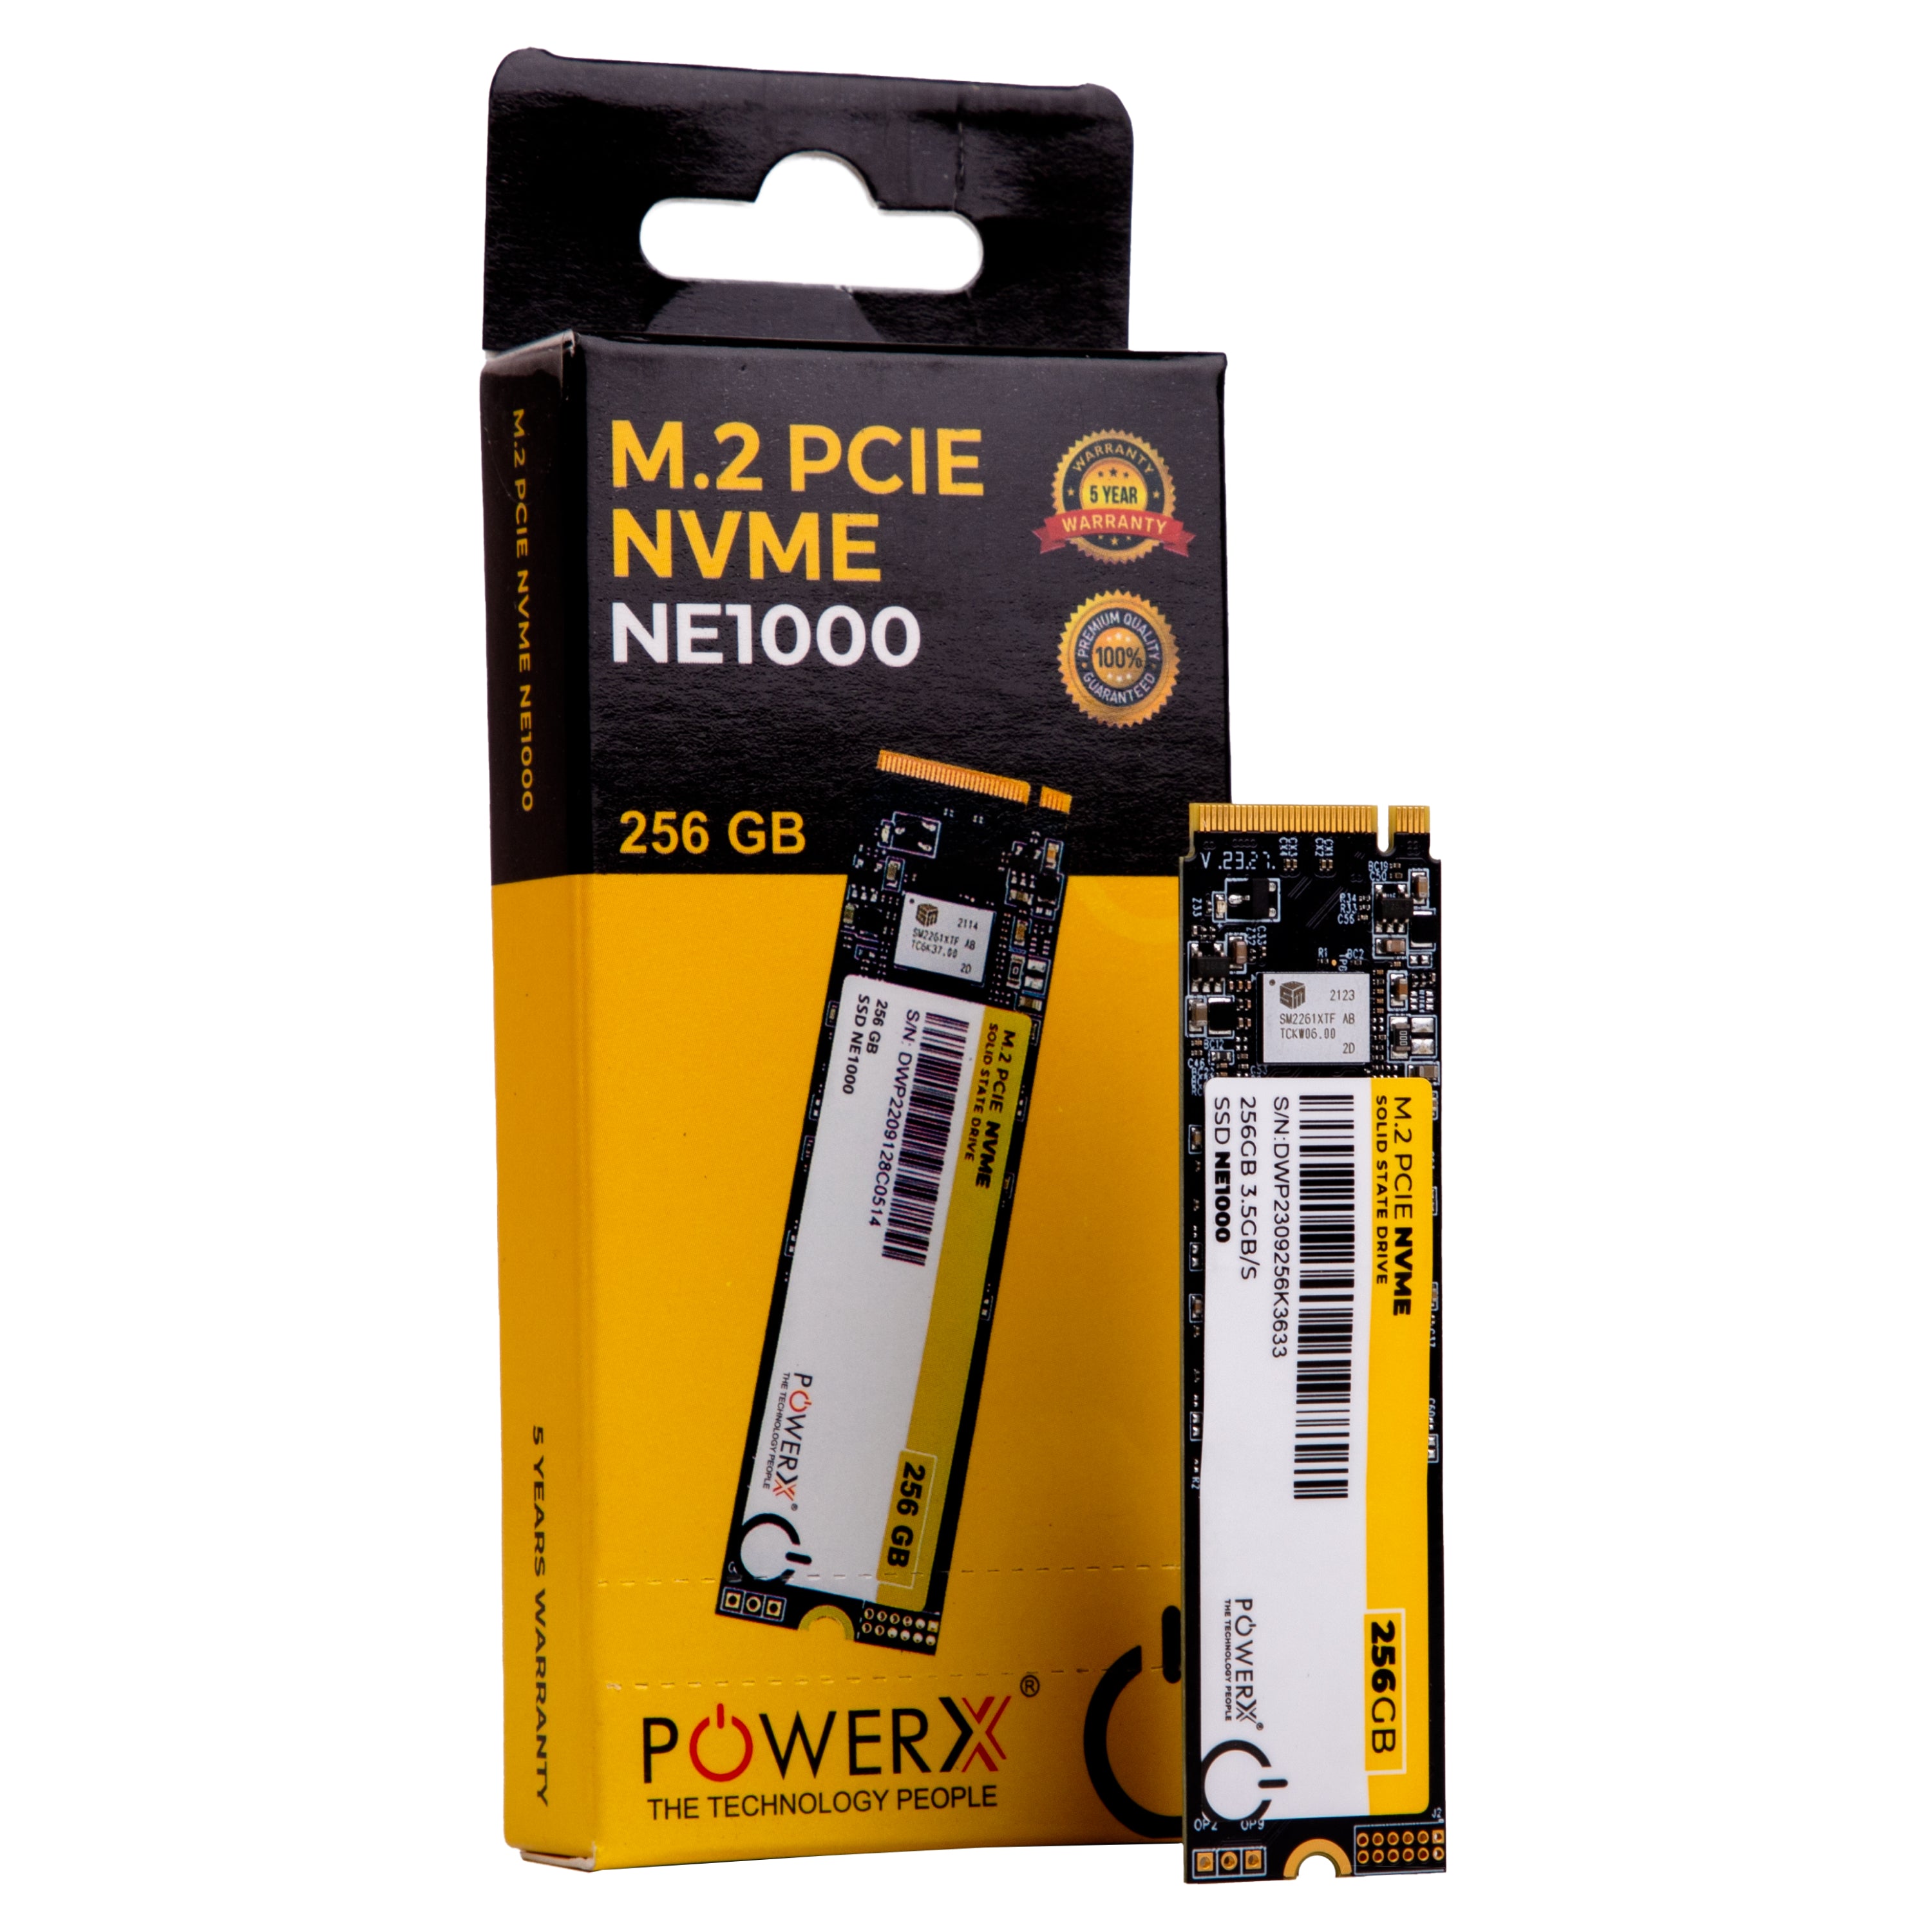 M.2. PCIE NVME 256 GB SSD